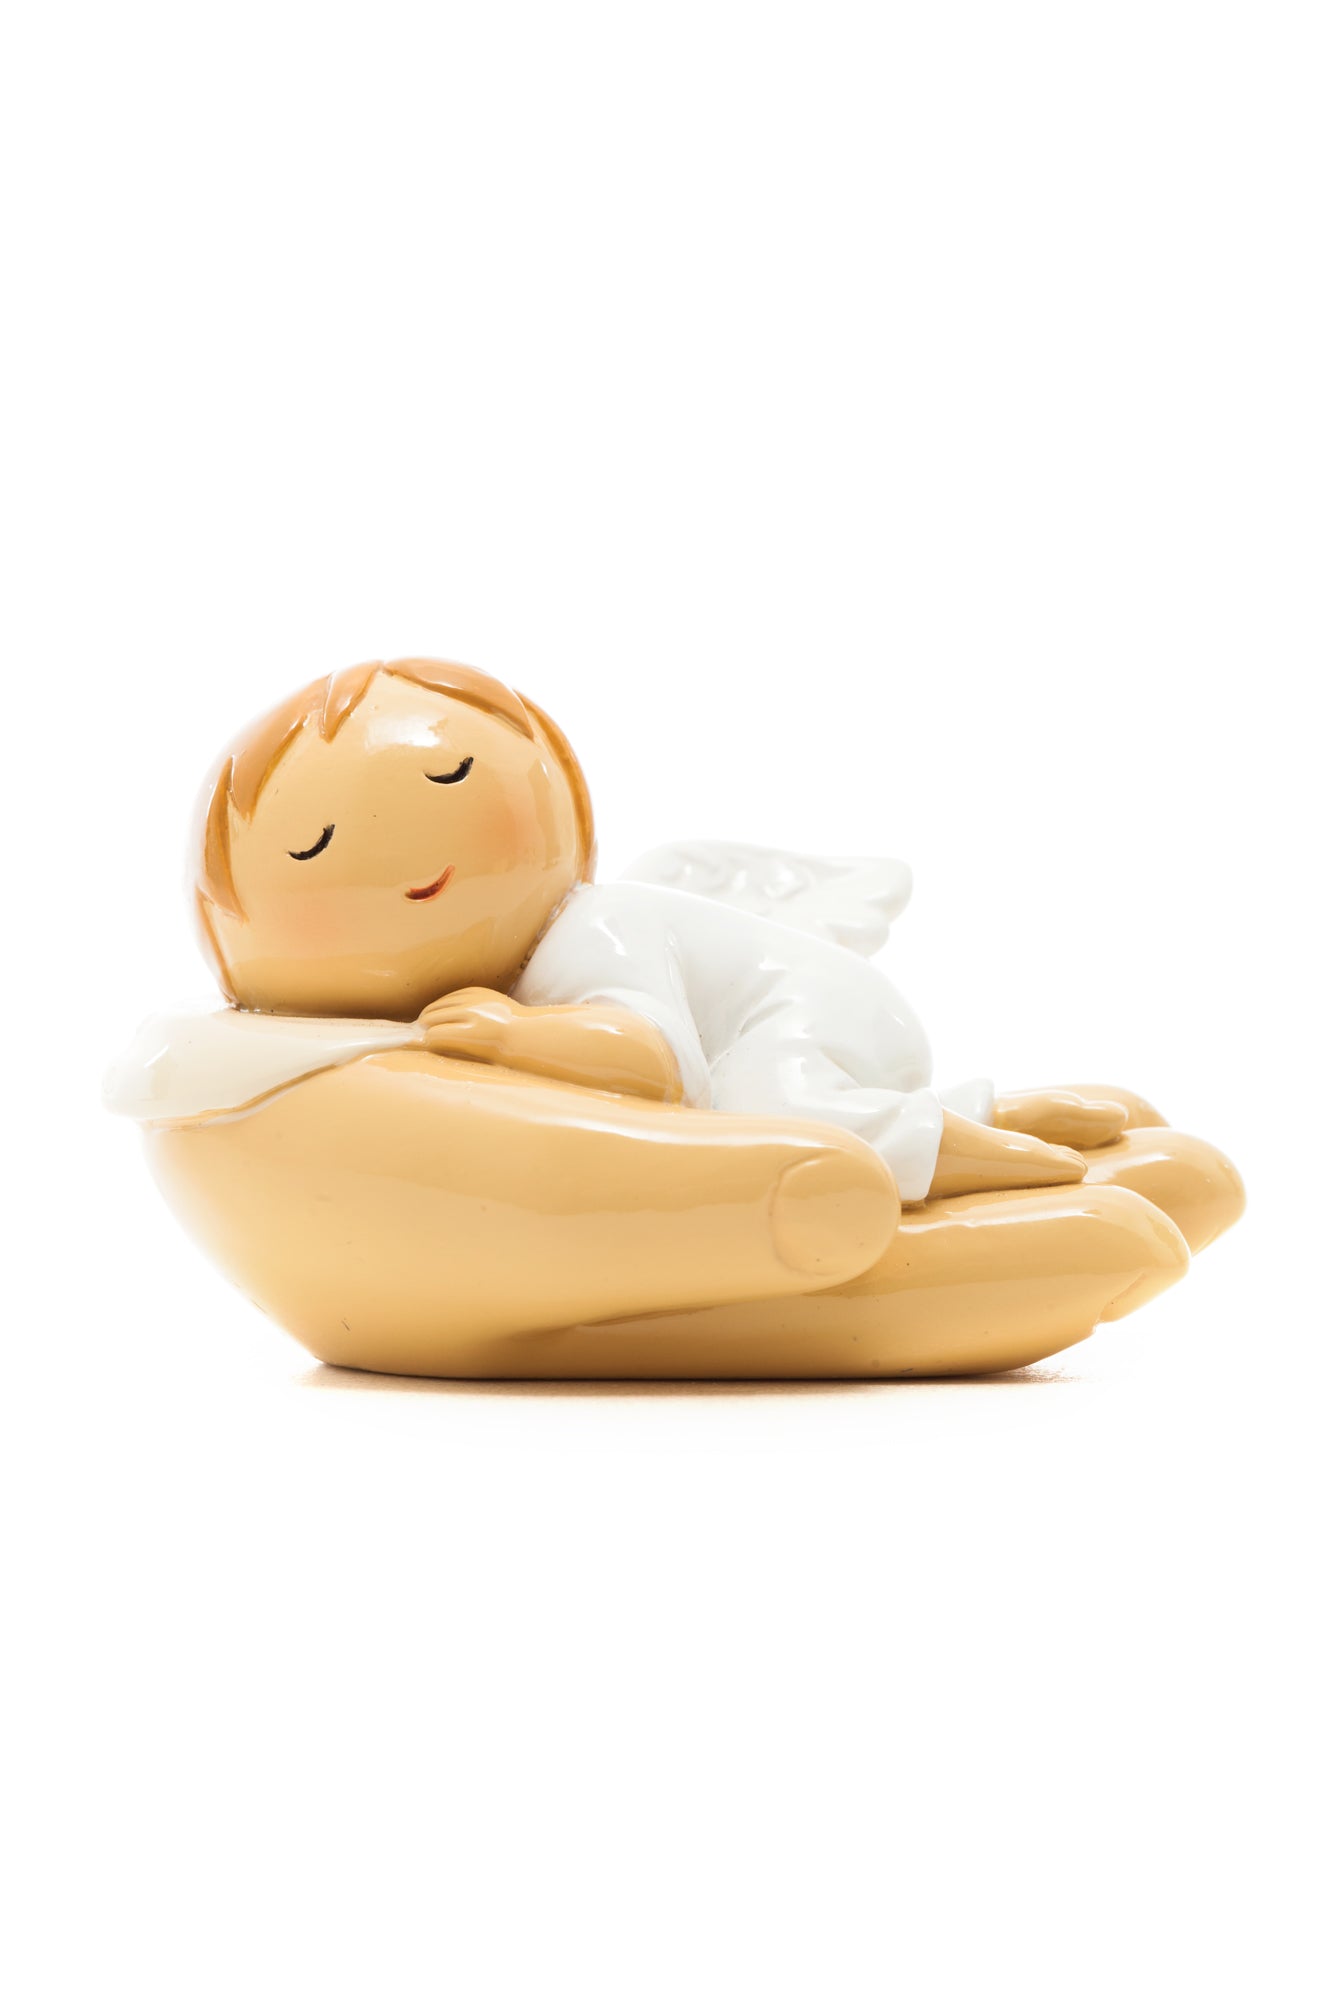 Baby Angel Sleeping on Hand statue